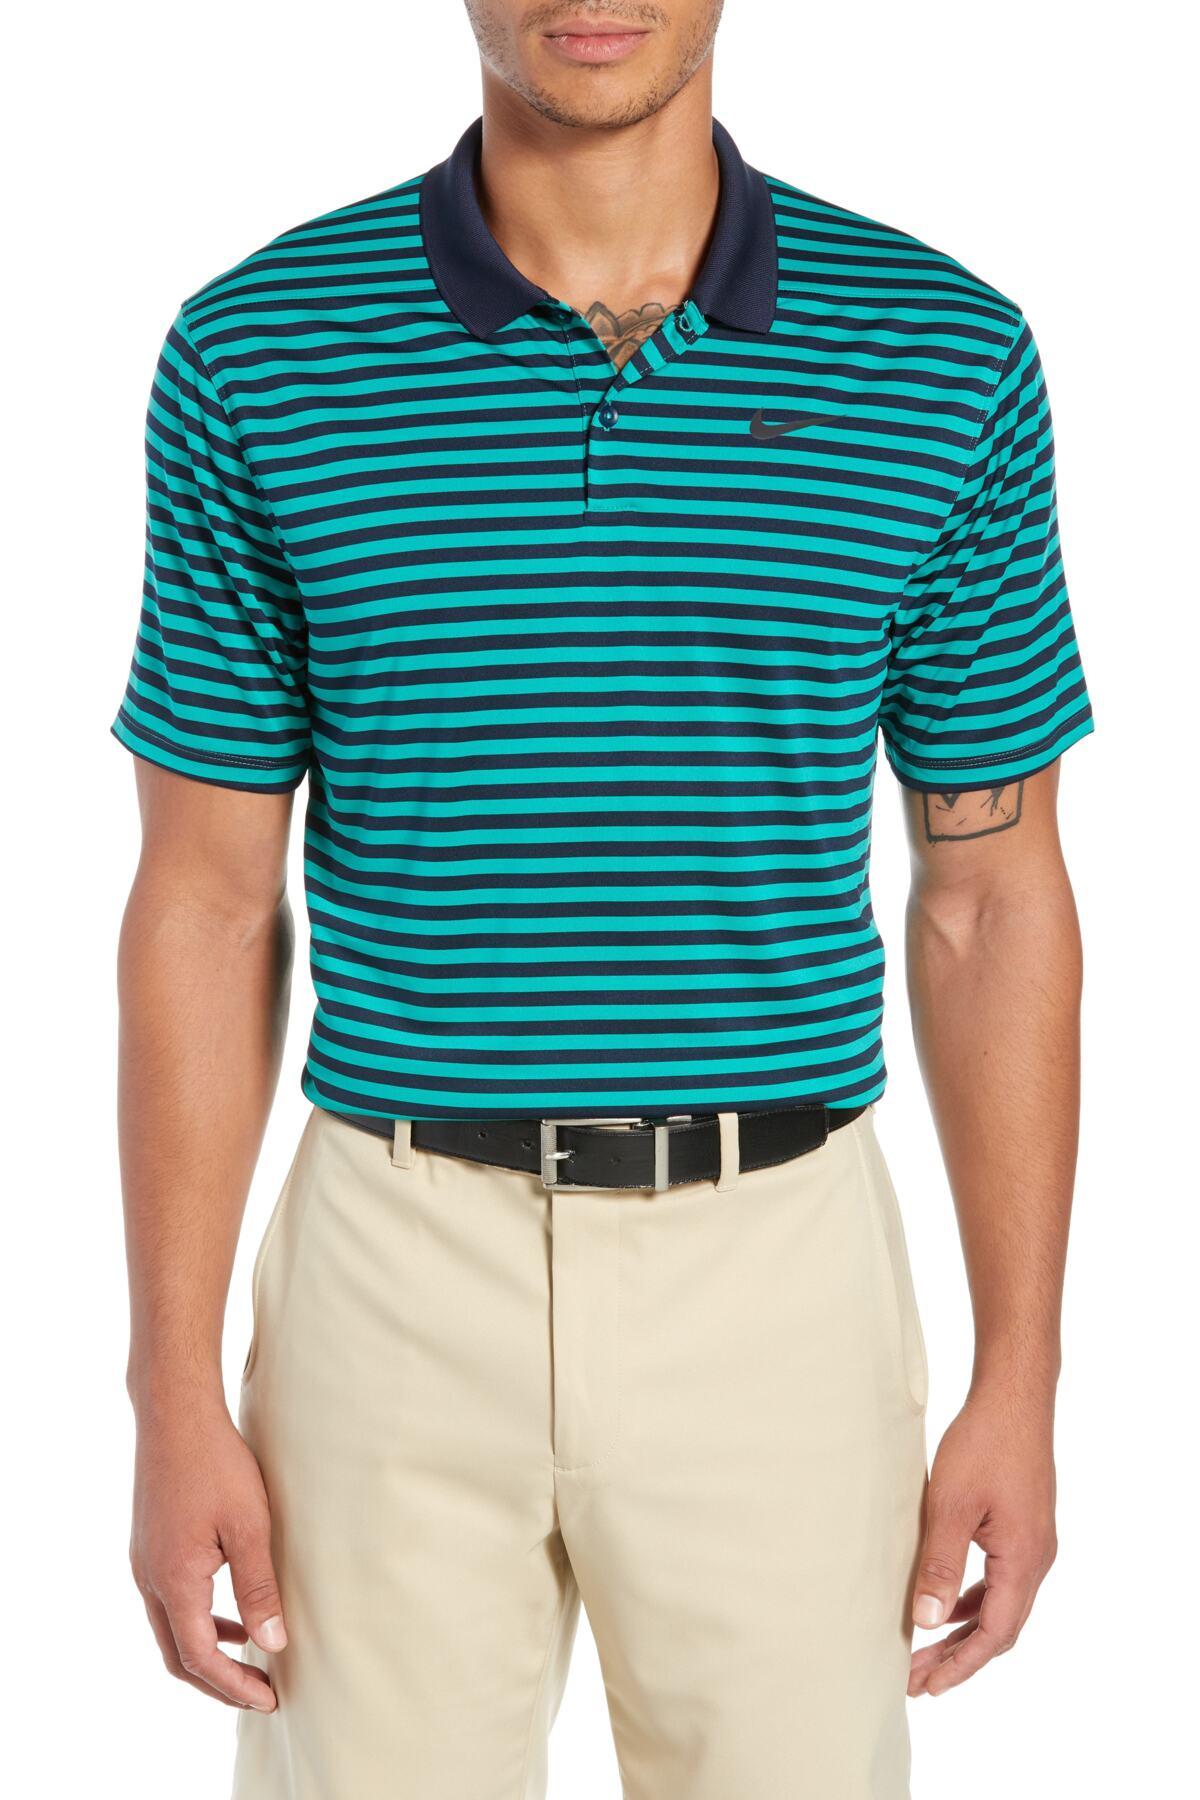 Nike Victory Stripe Dri-fit Golf Polo for Men - Lyst